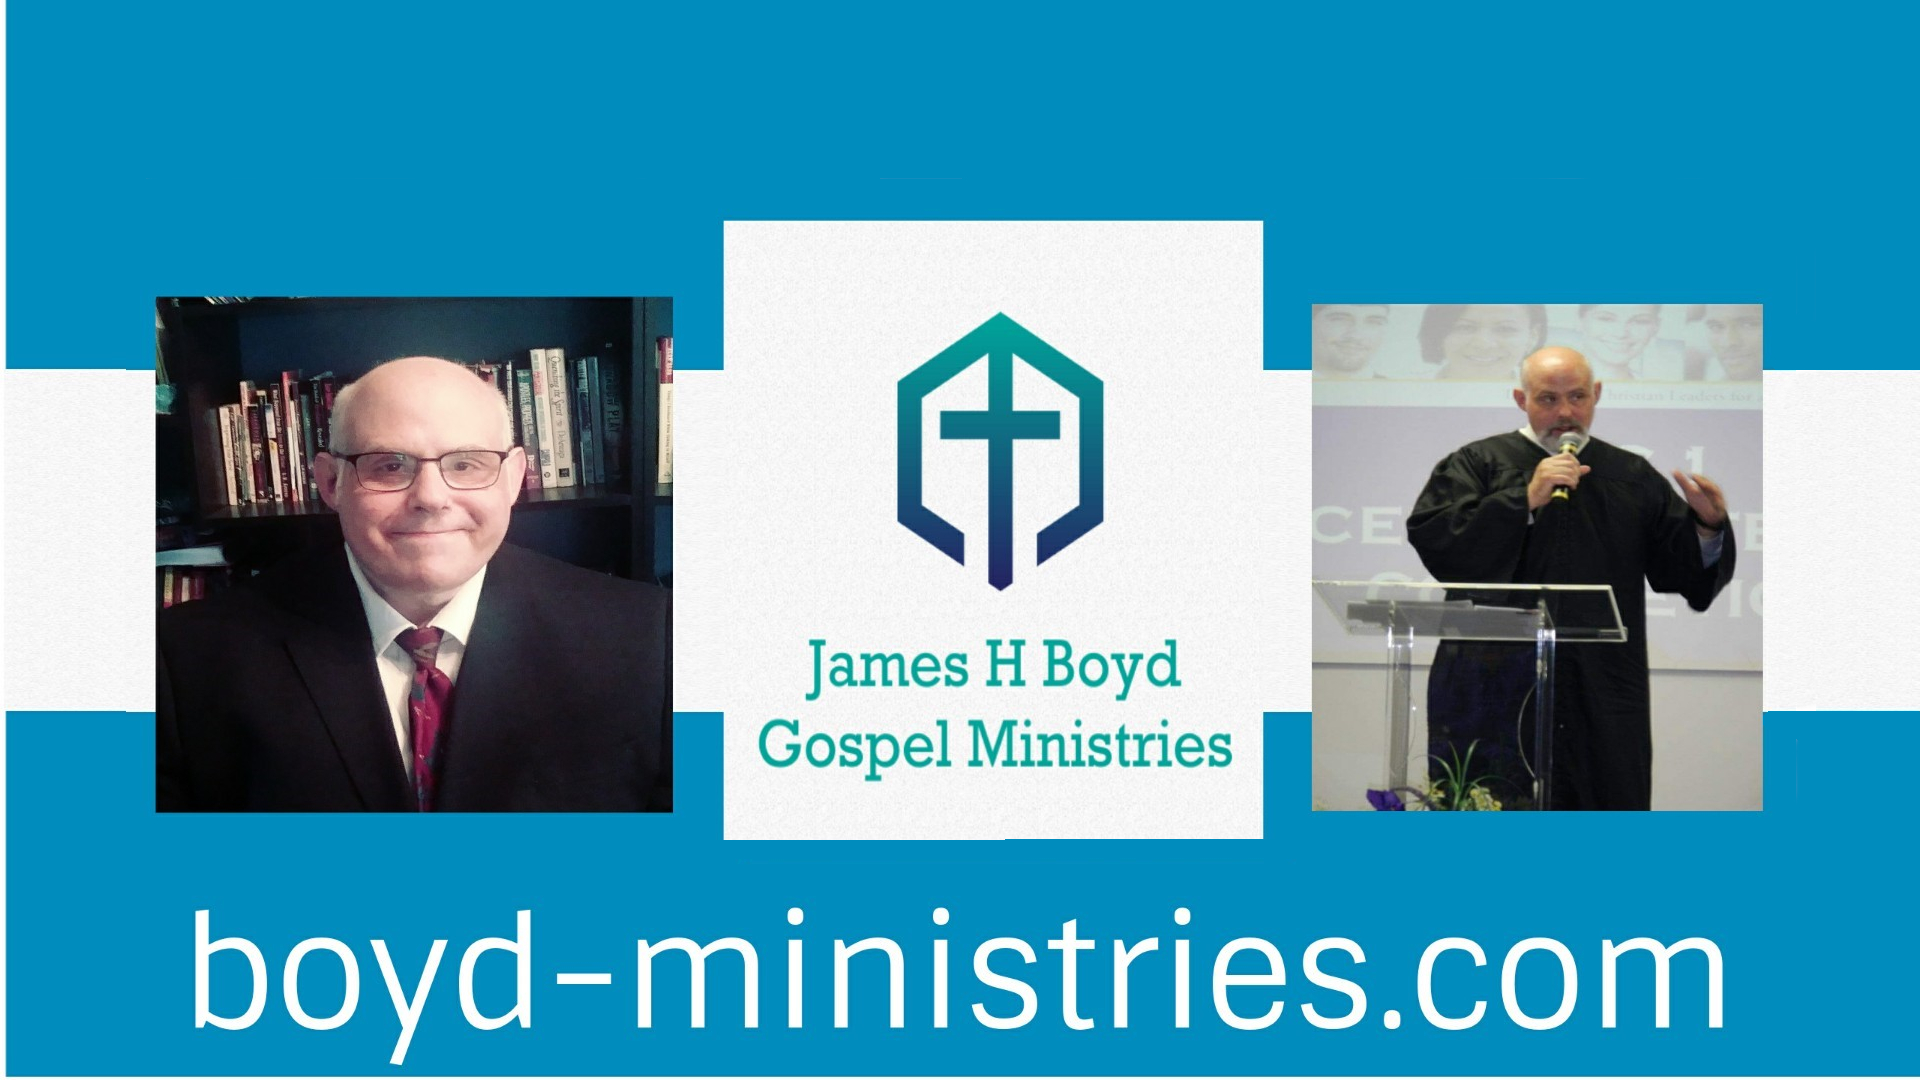  James H Boyd Gospel Ministries